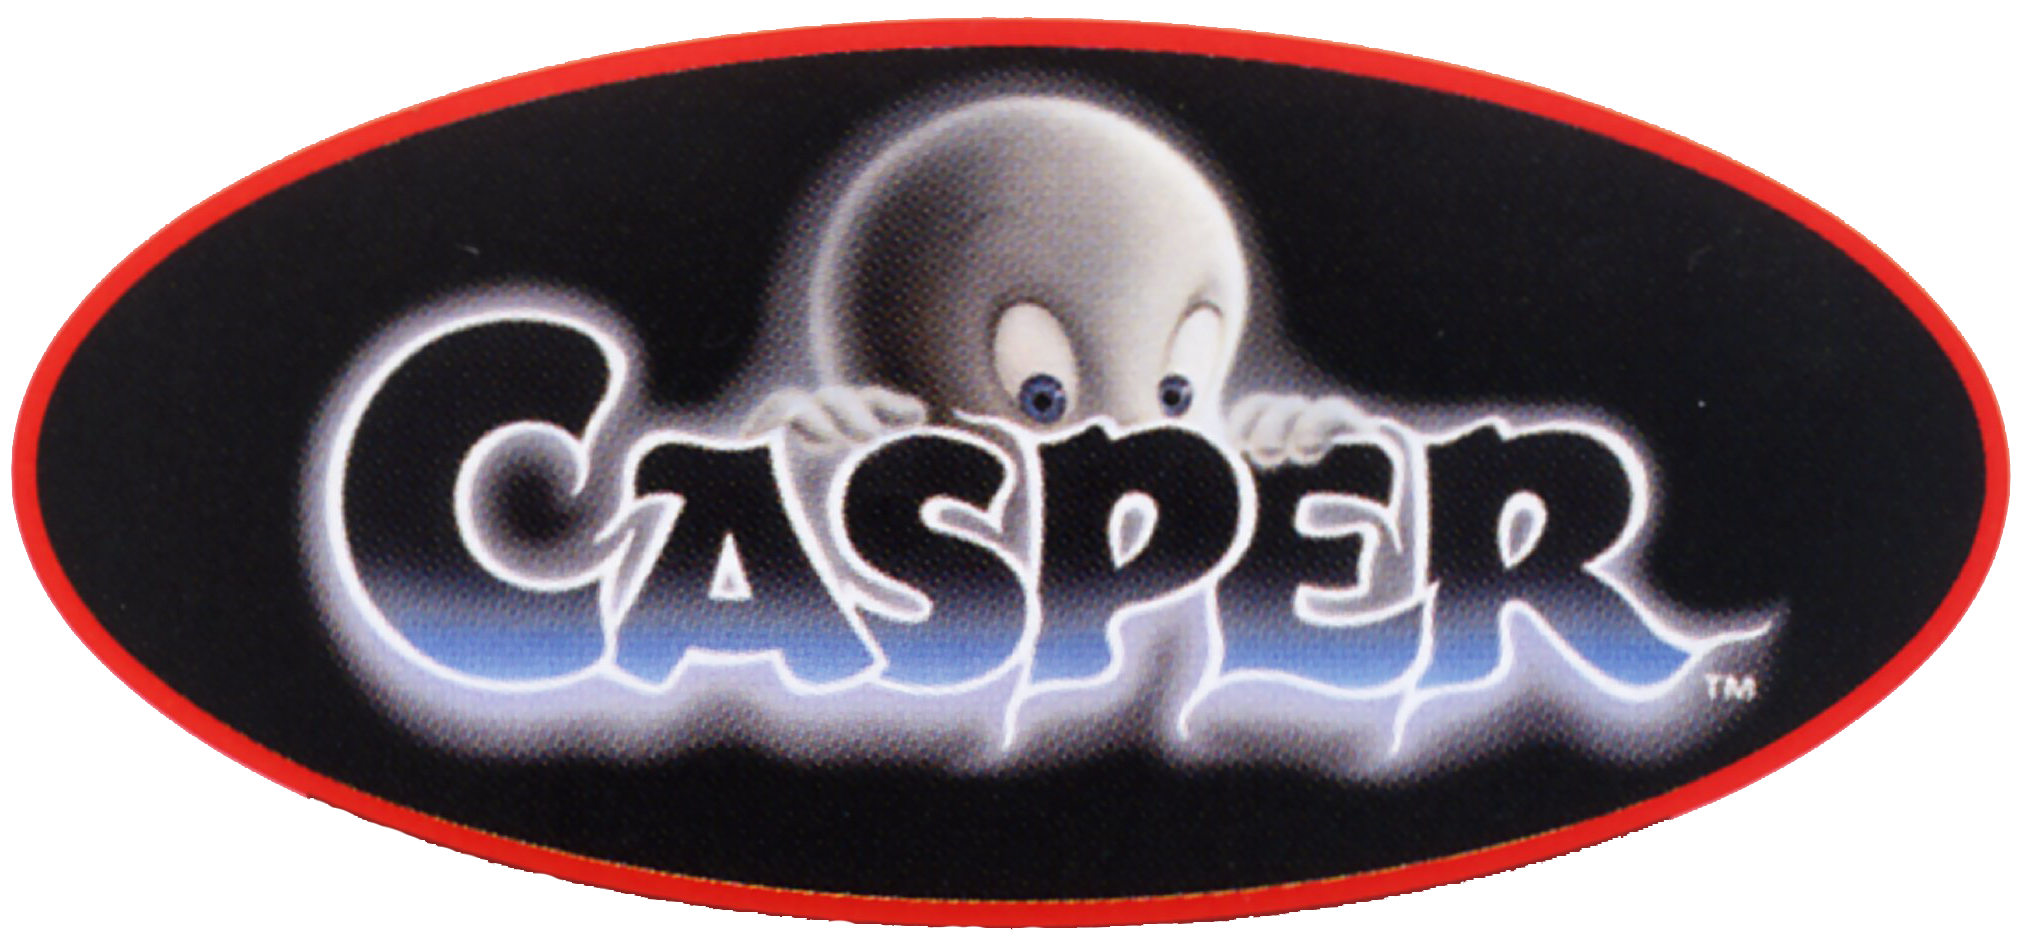 Casper spins casperspins casino net ru. Каспер. Каспер надпись. Каспер наклейка. Нашивка Каспер.